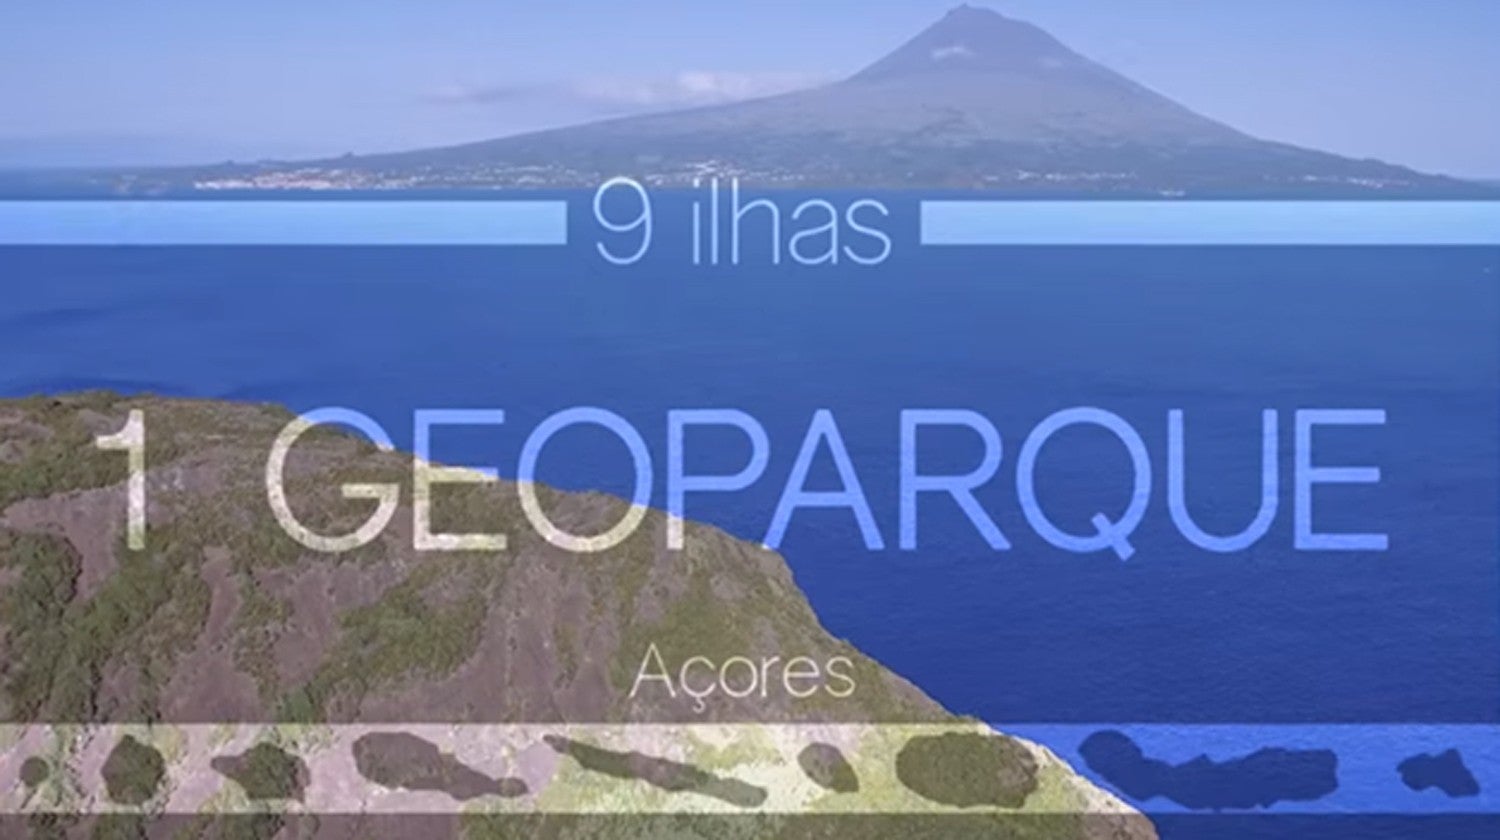 Geoparque Açores